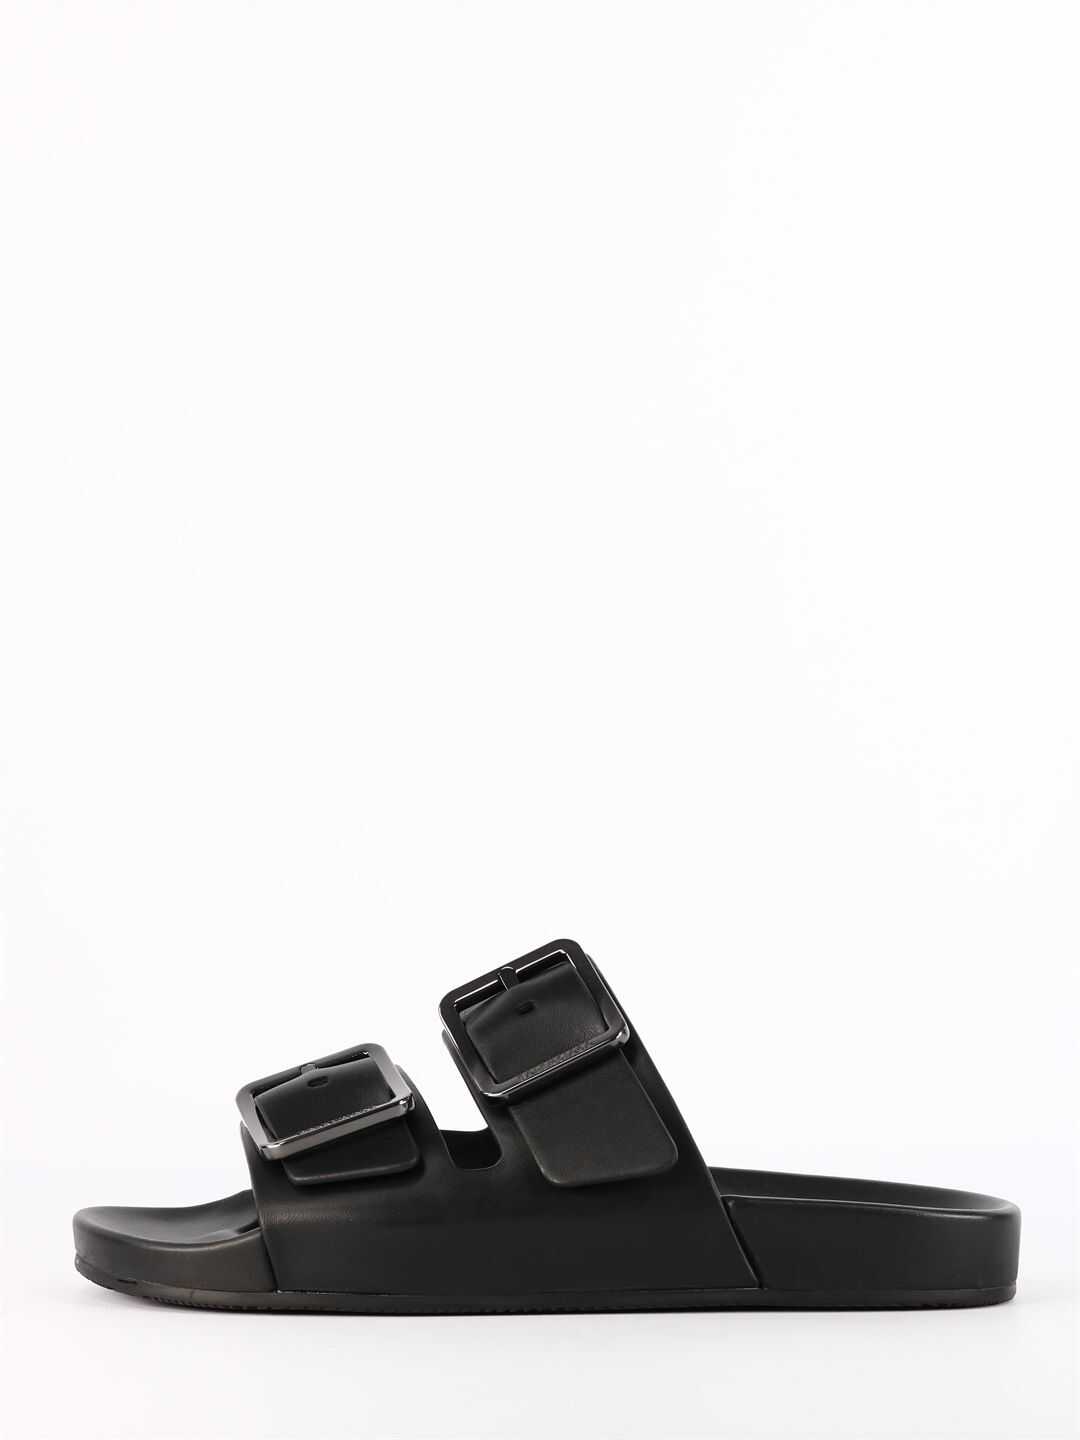 Balenciaga Malllorca Lather Sandals 656839 WA2M6 Black